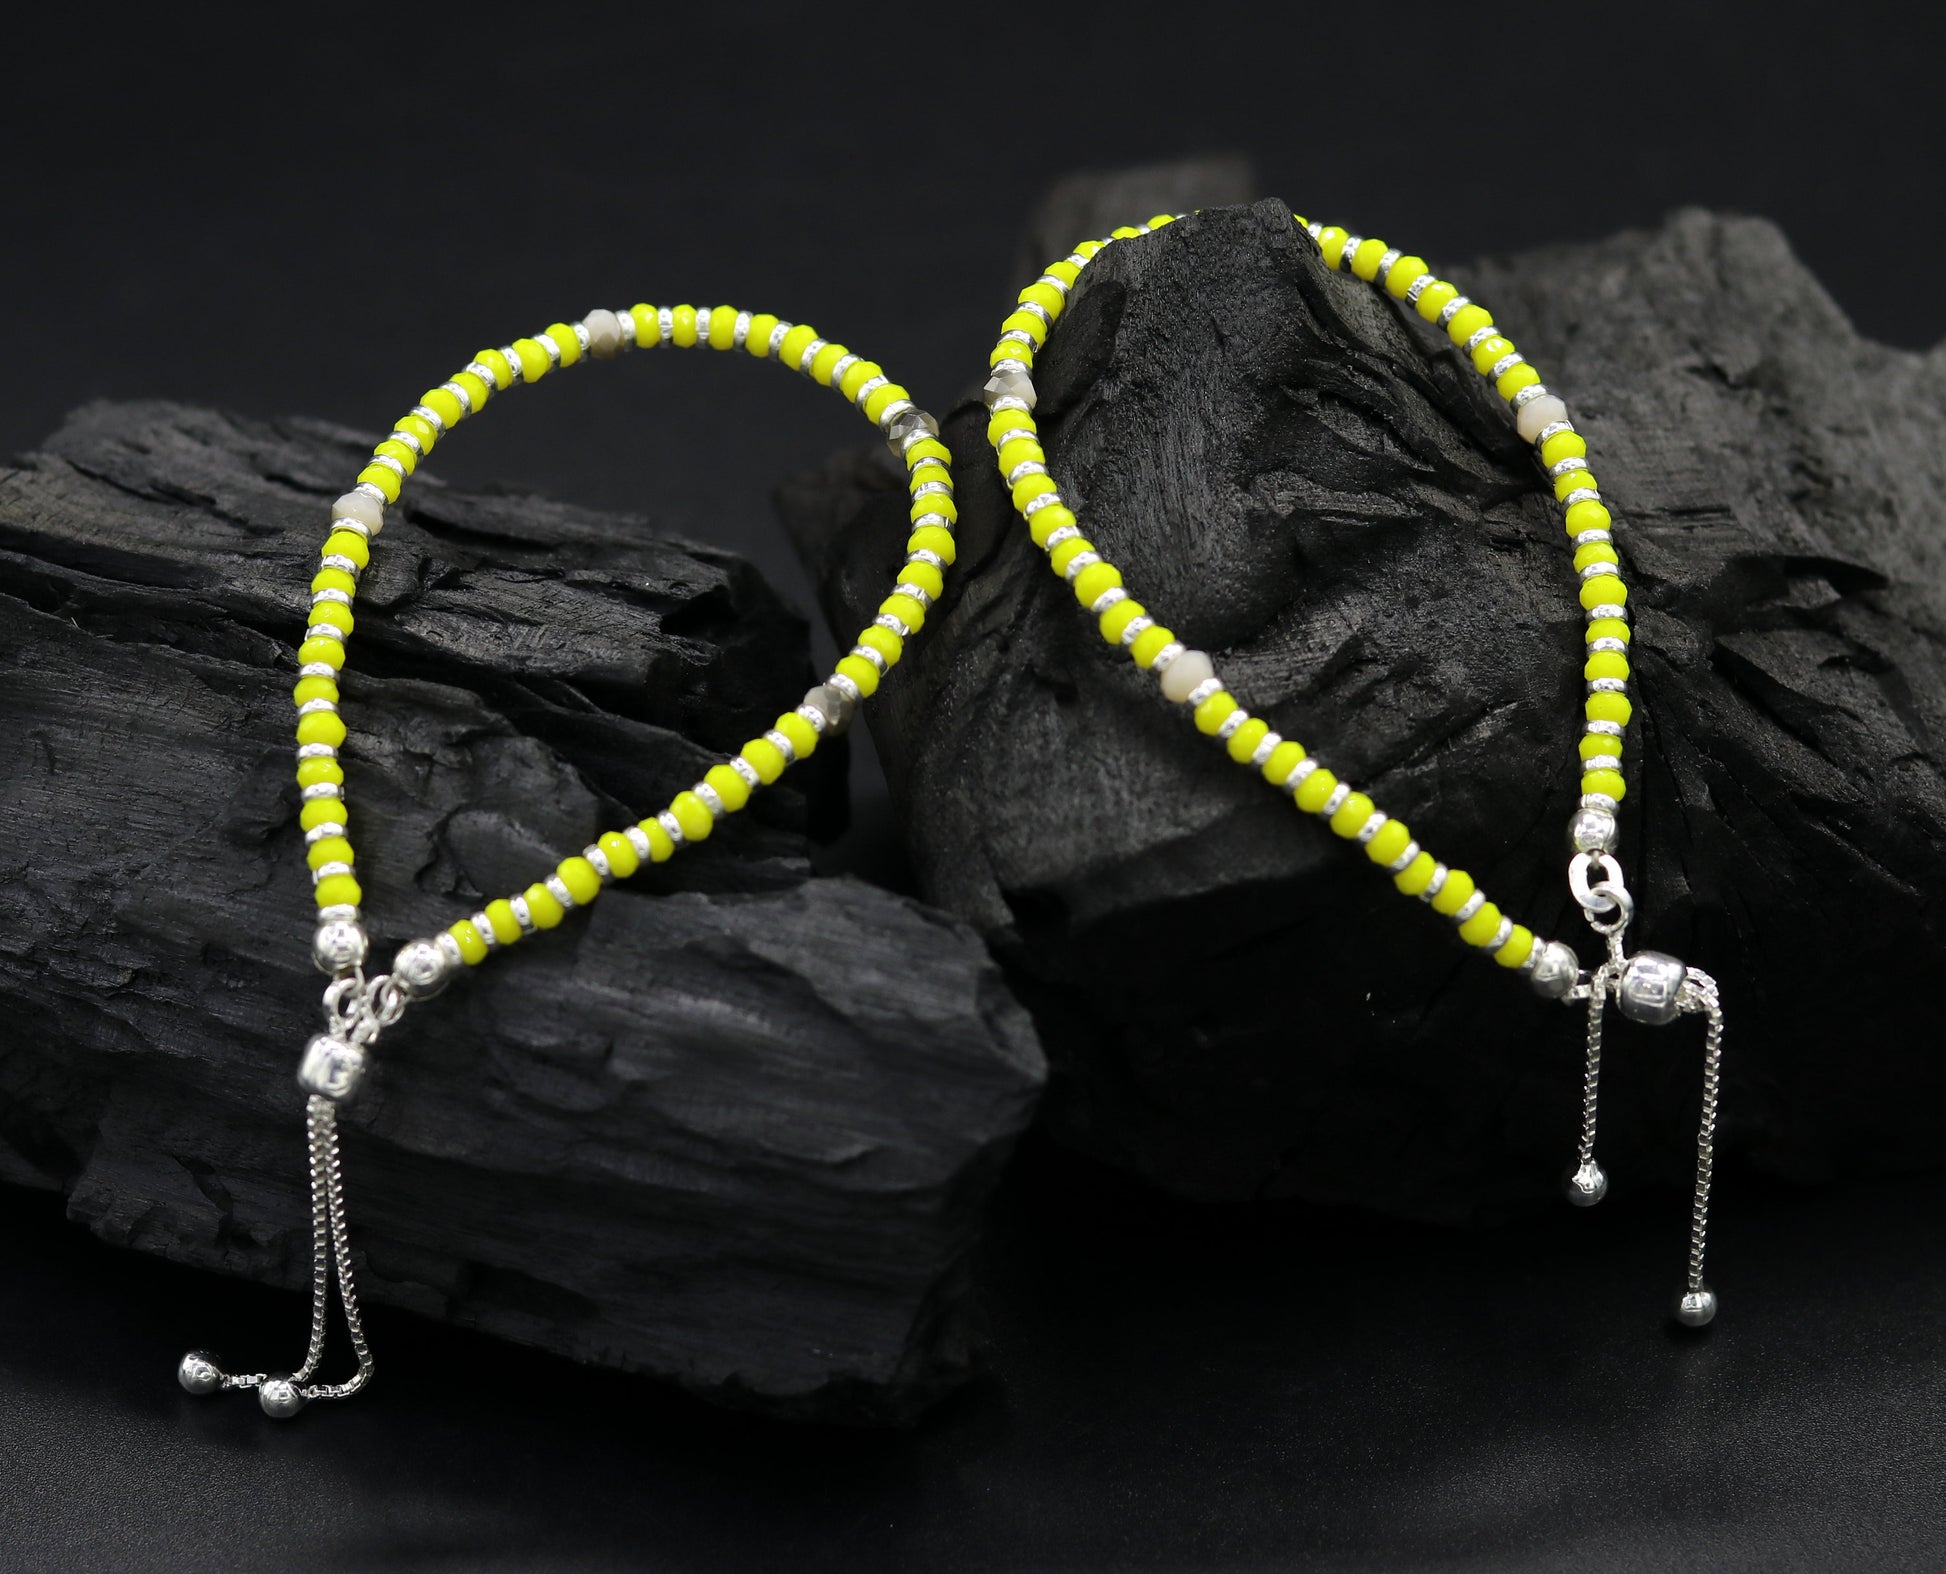 7" 925 sterling silver gorgeous silver and yellow beads adjustable bracelet, charm bracelet, customized bracelet girl's jewelry sbr164 - TRIBAL ORNAMENTS